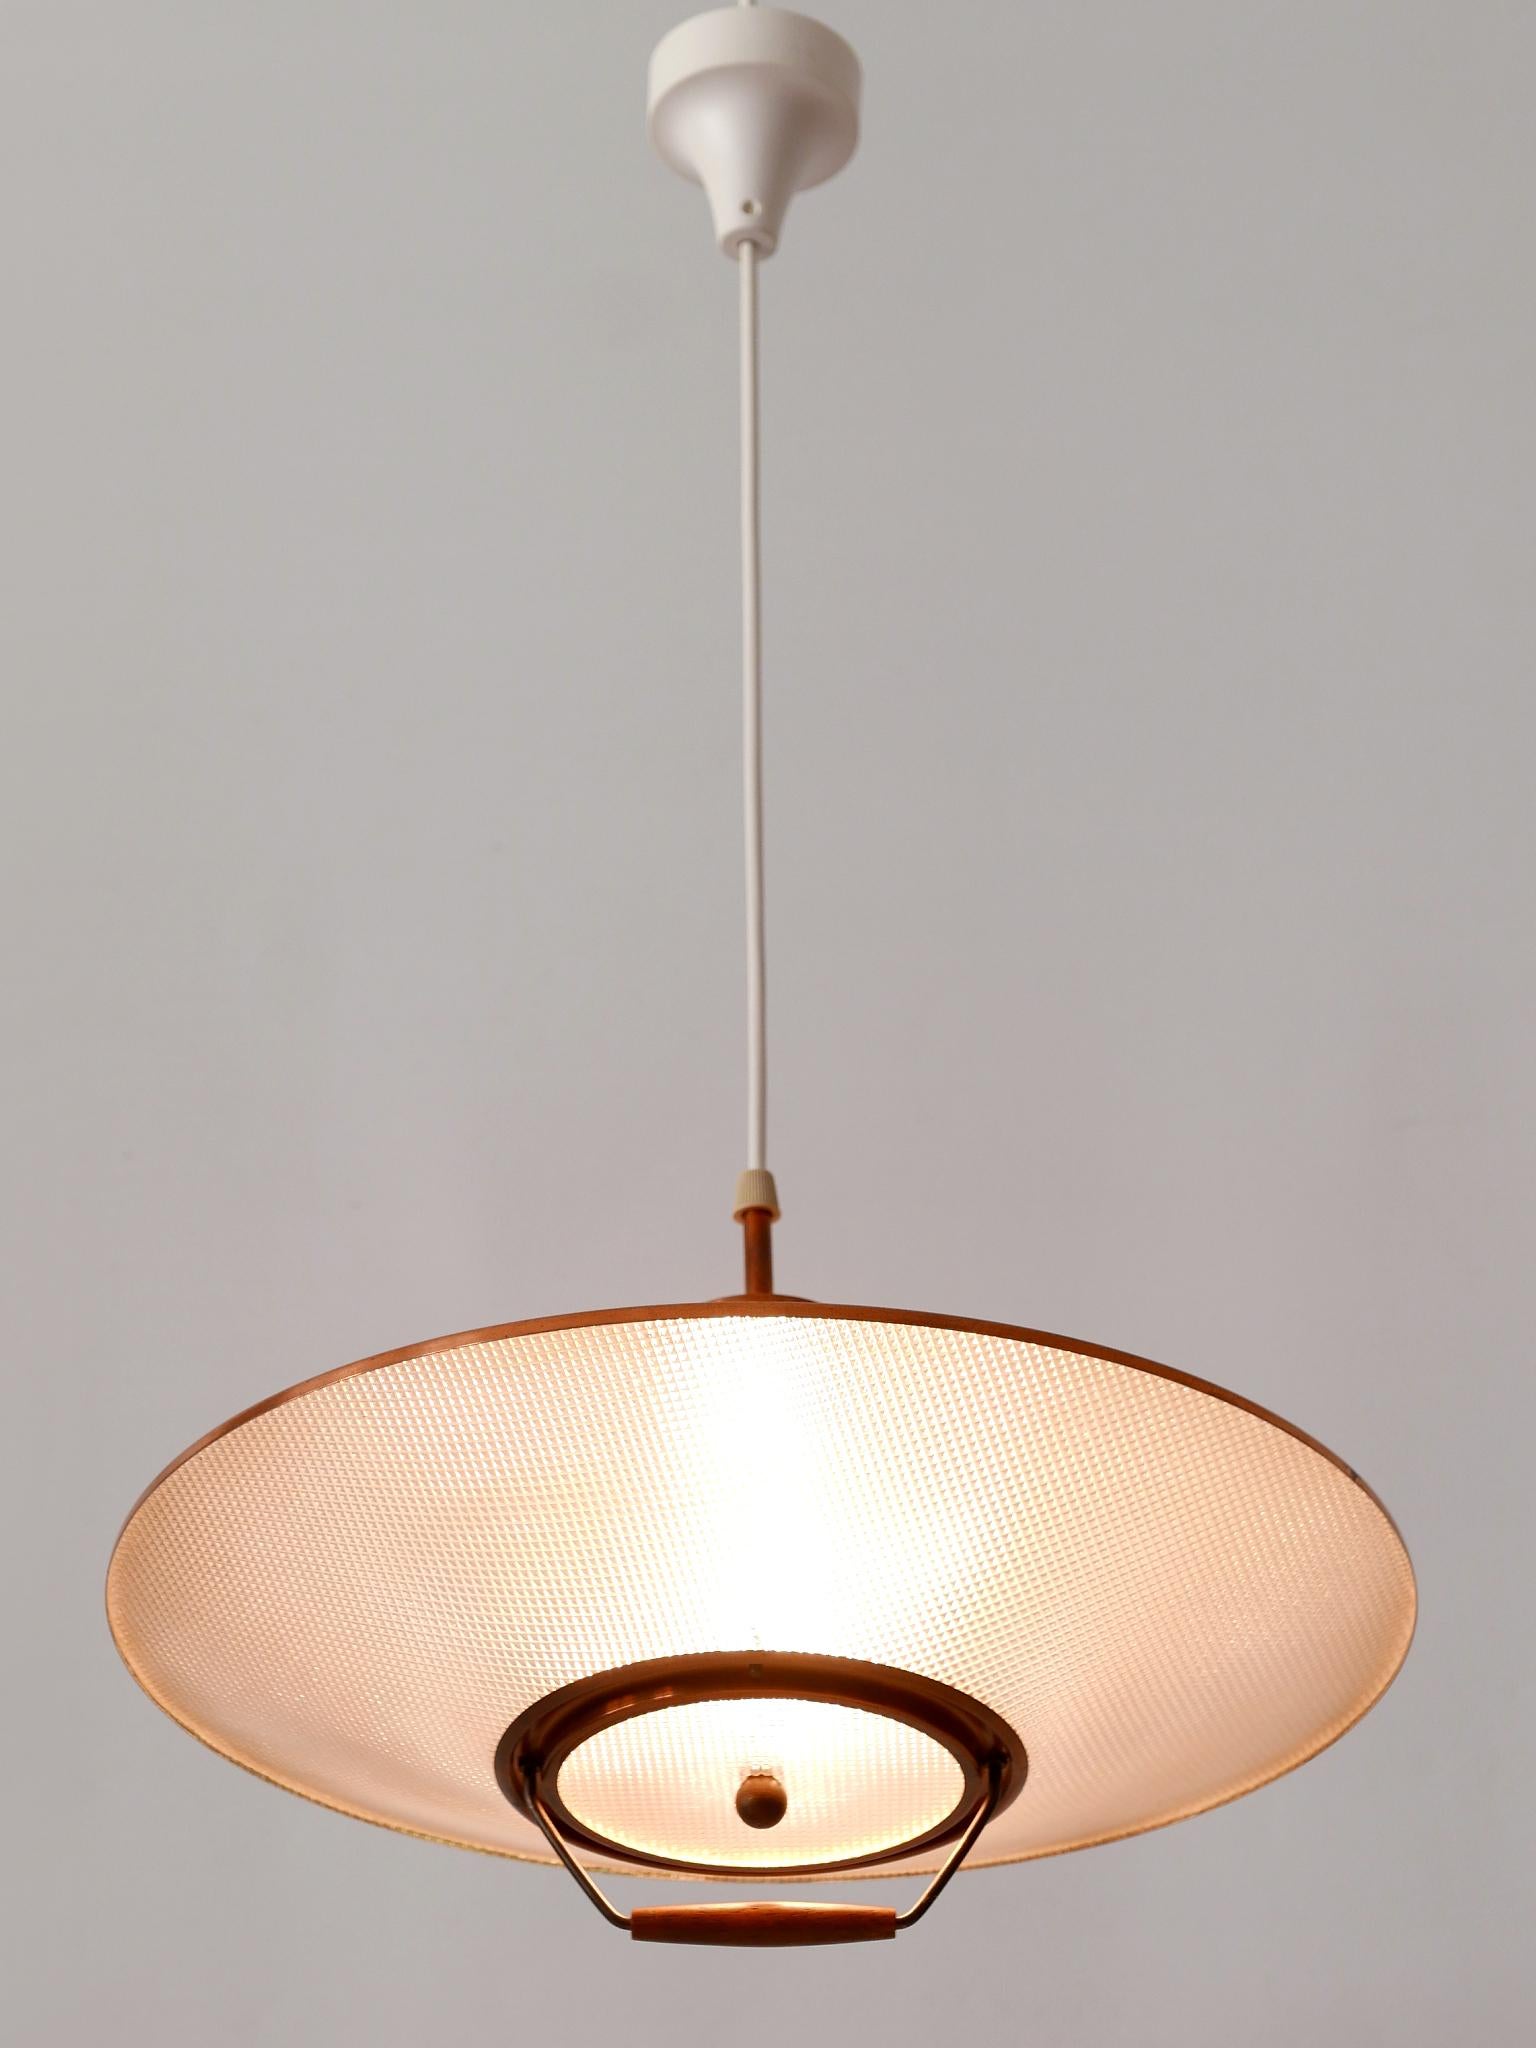 Rare Mid-Century Modern Scandinavian Copper Pendant Lamp or Hanging Light 1960s  For Sale 11